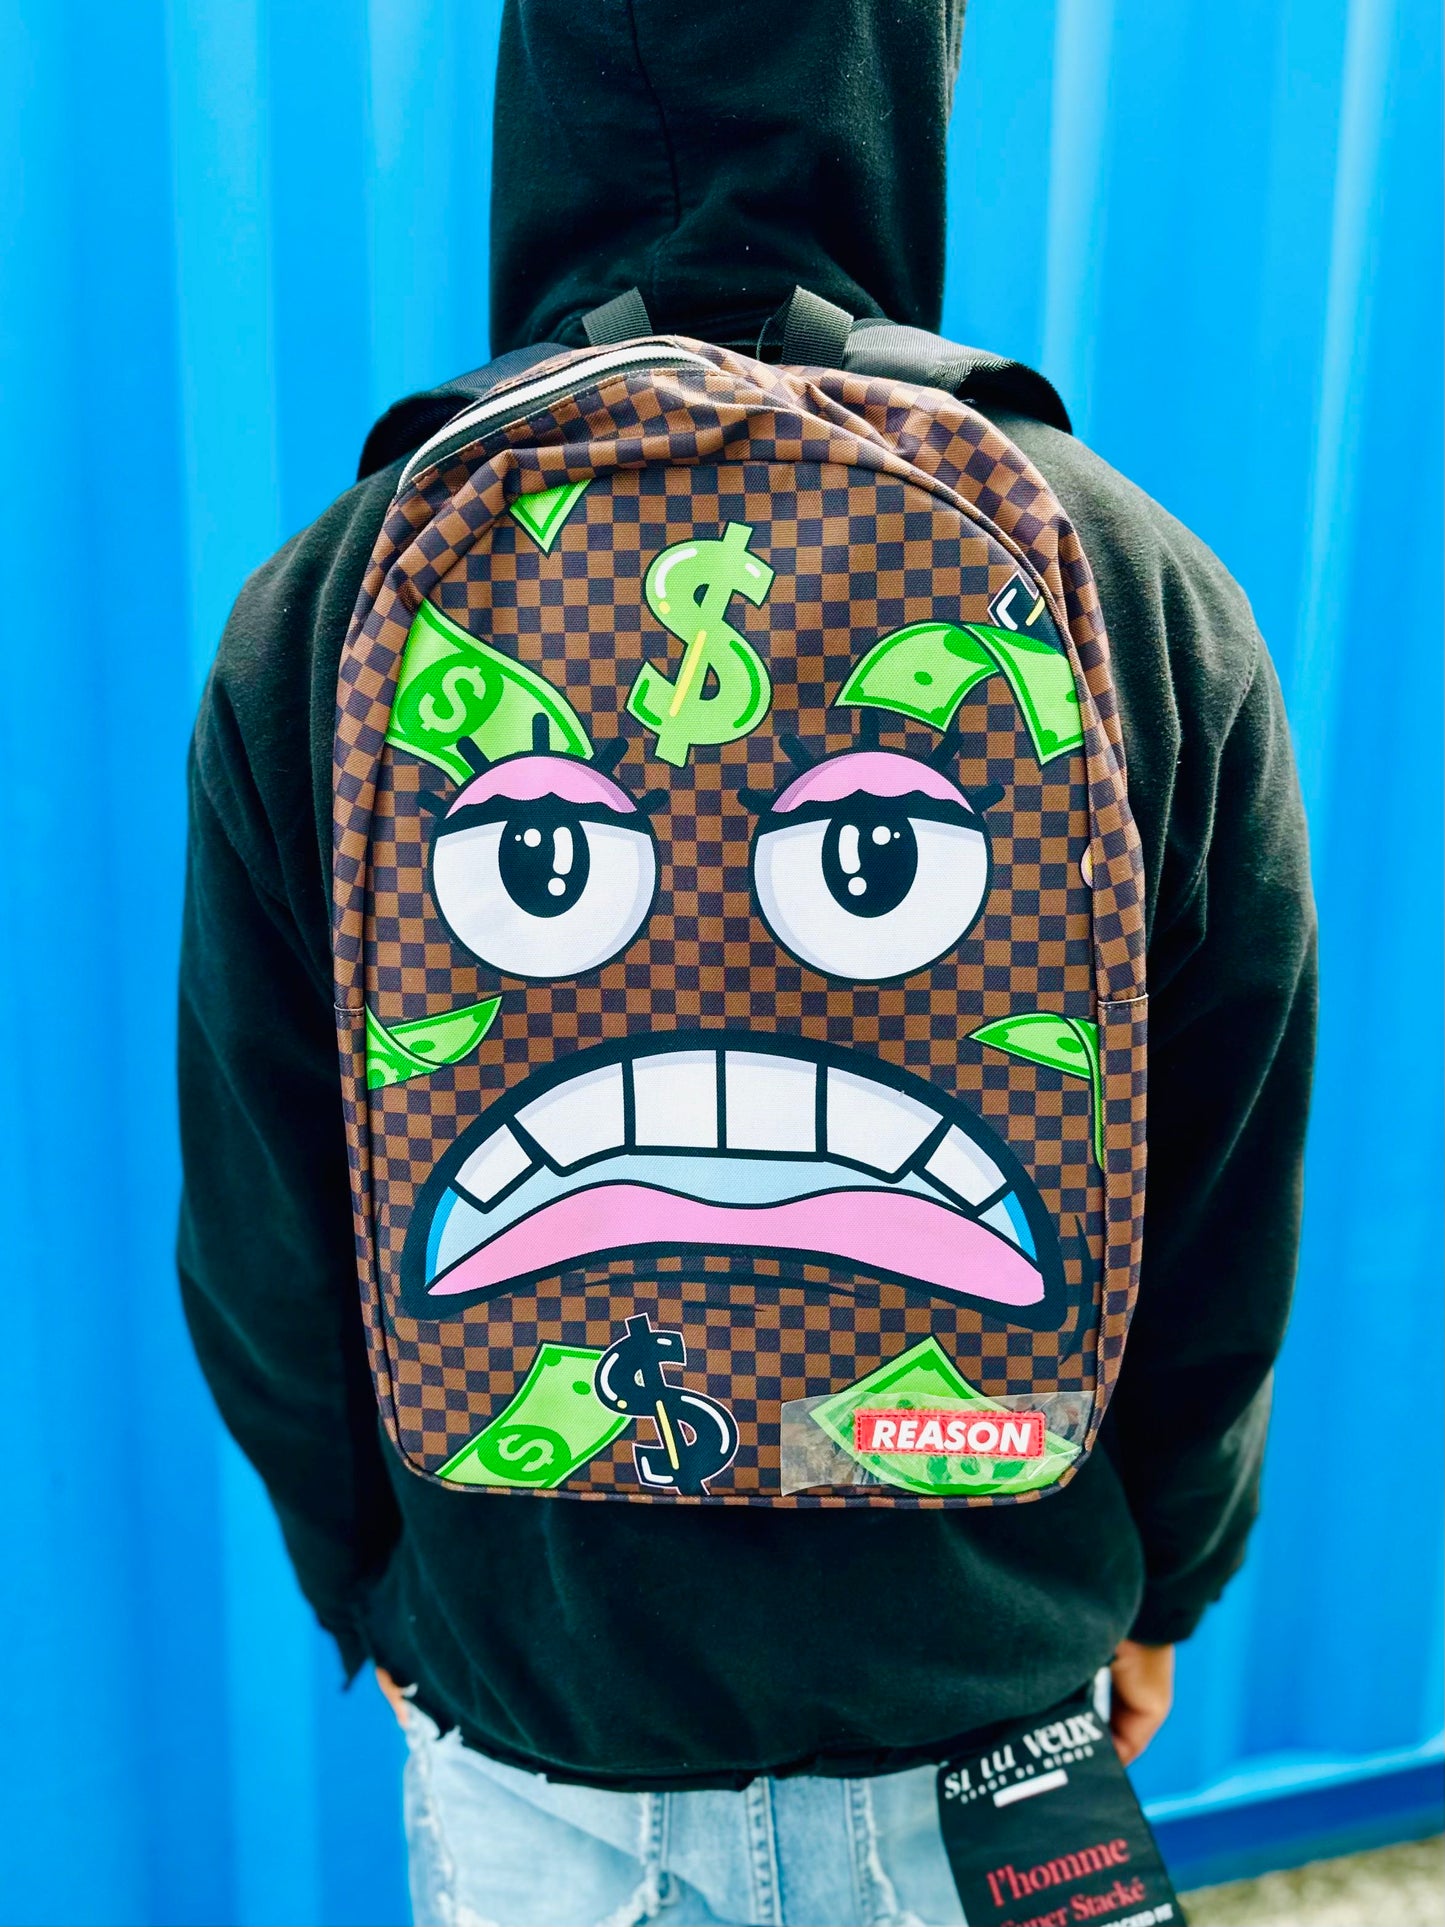 Mad Money Backpack (Multi)